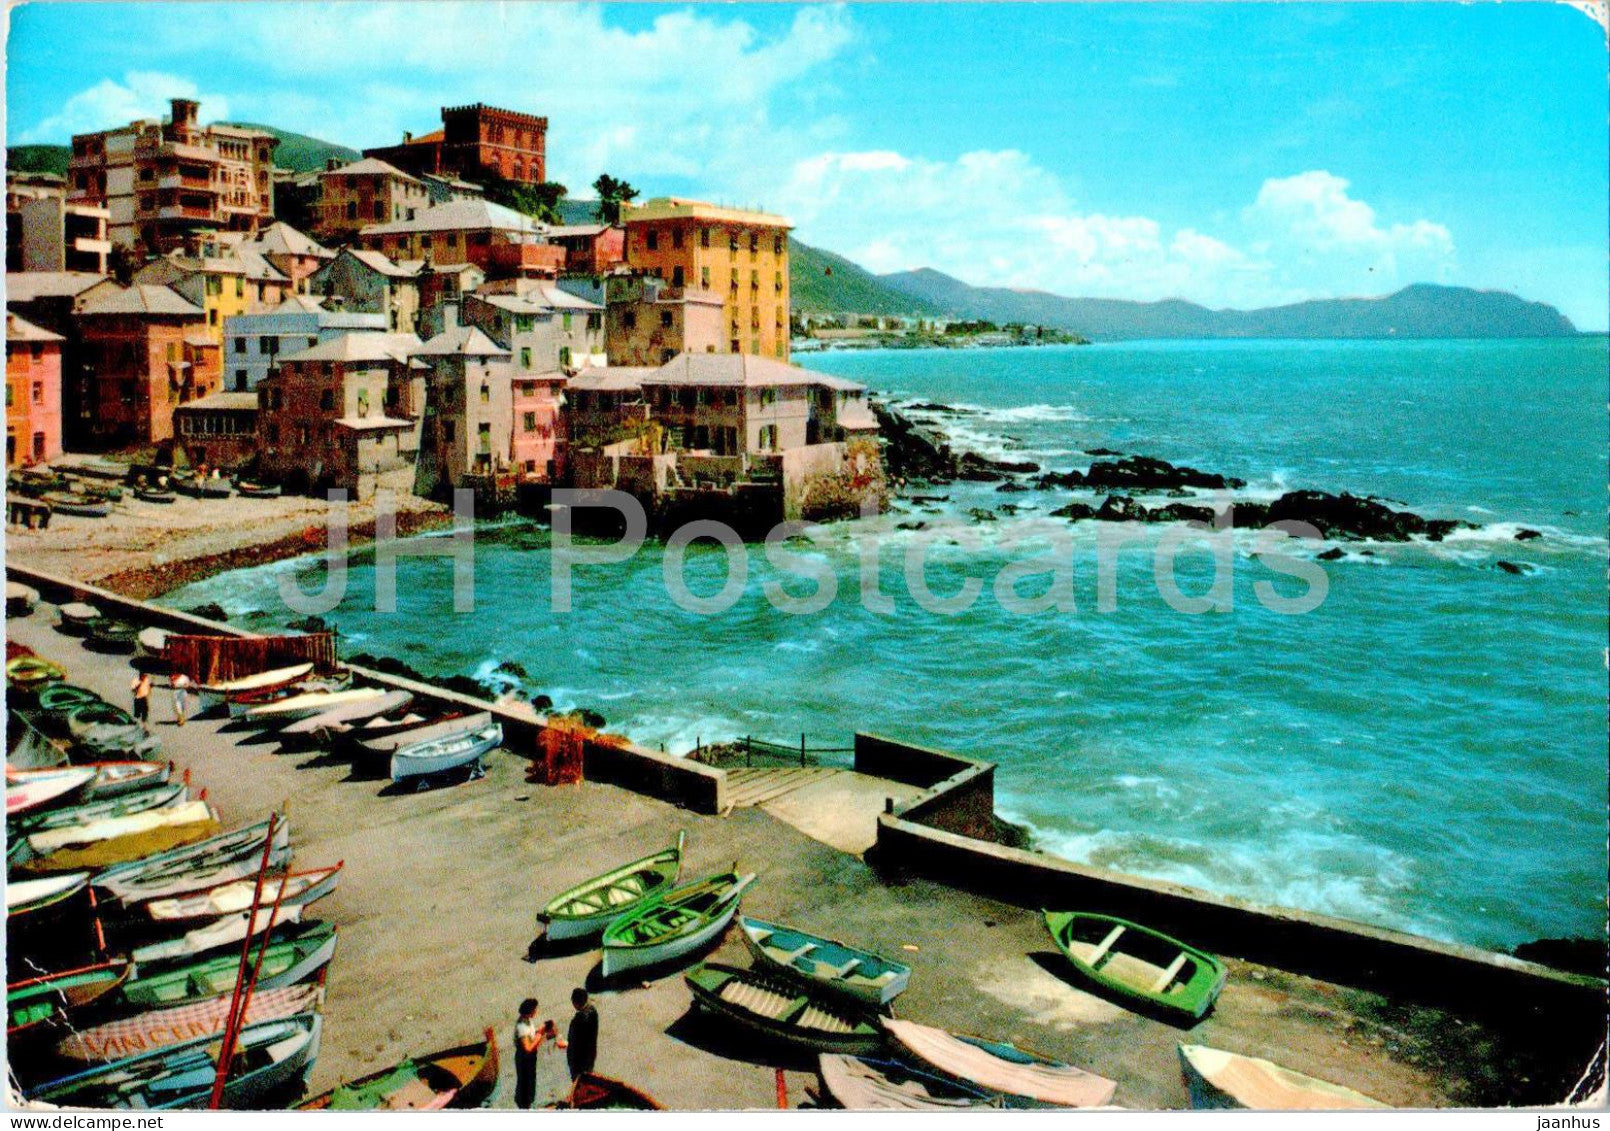 Genova - Boccadasse - panorama - boat - 3609 - 1974 - Italy - used - JH Postcards